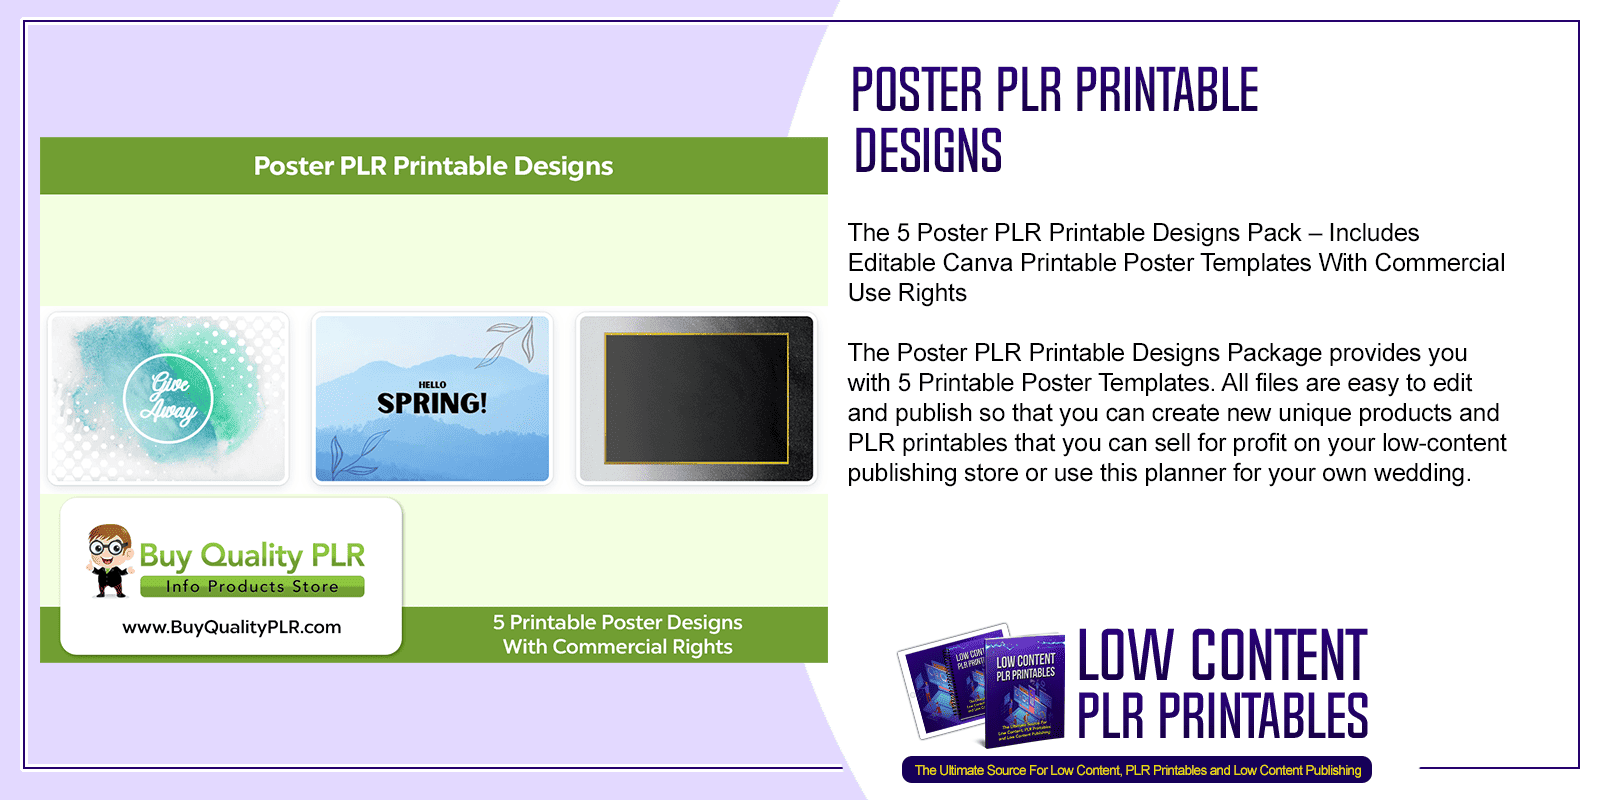 Poster PLR Printable Designs